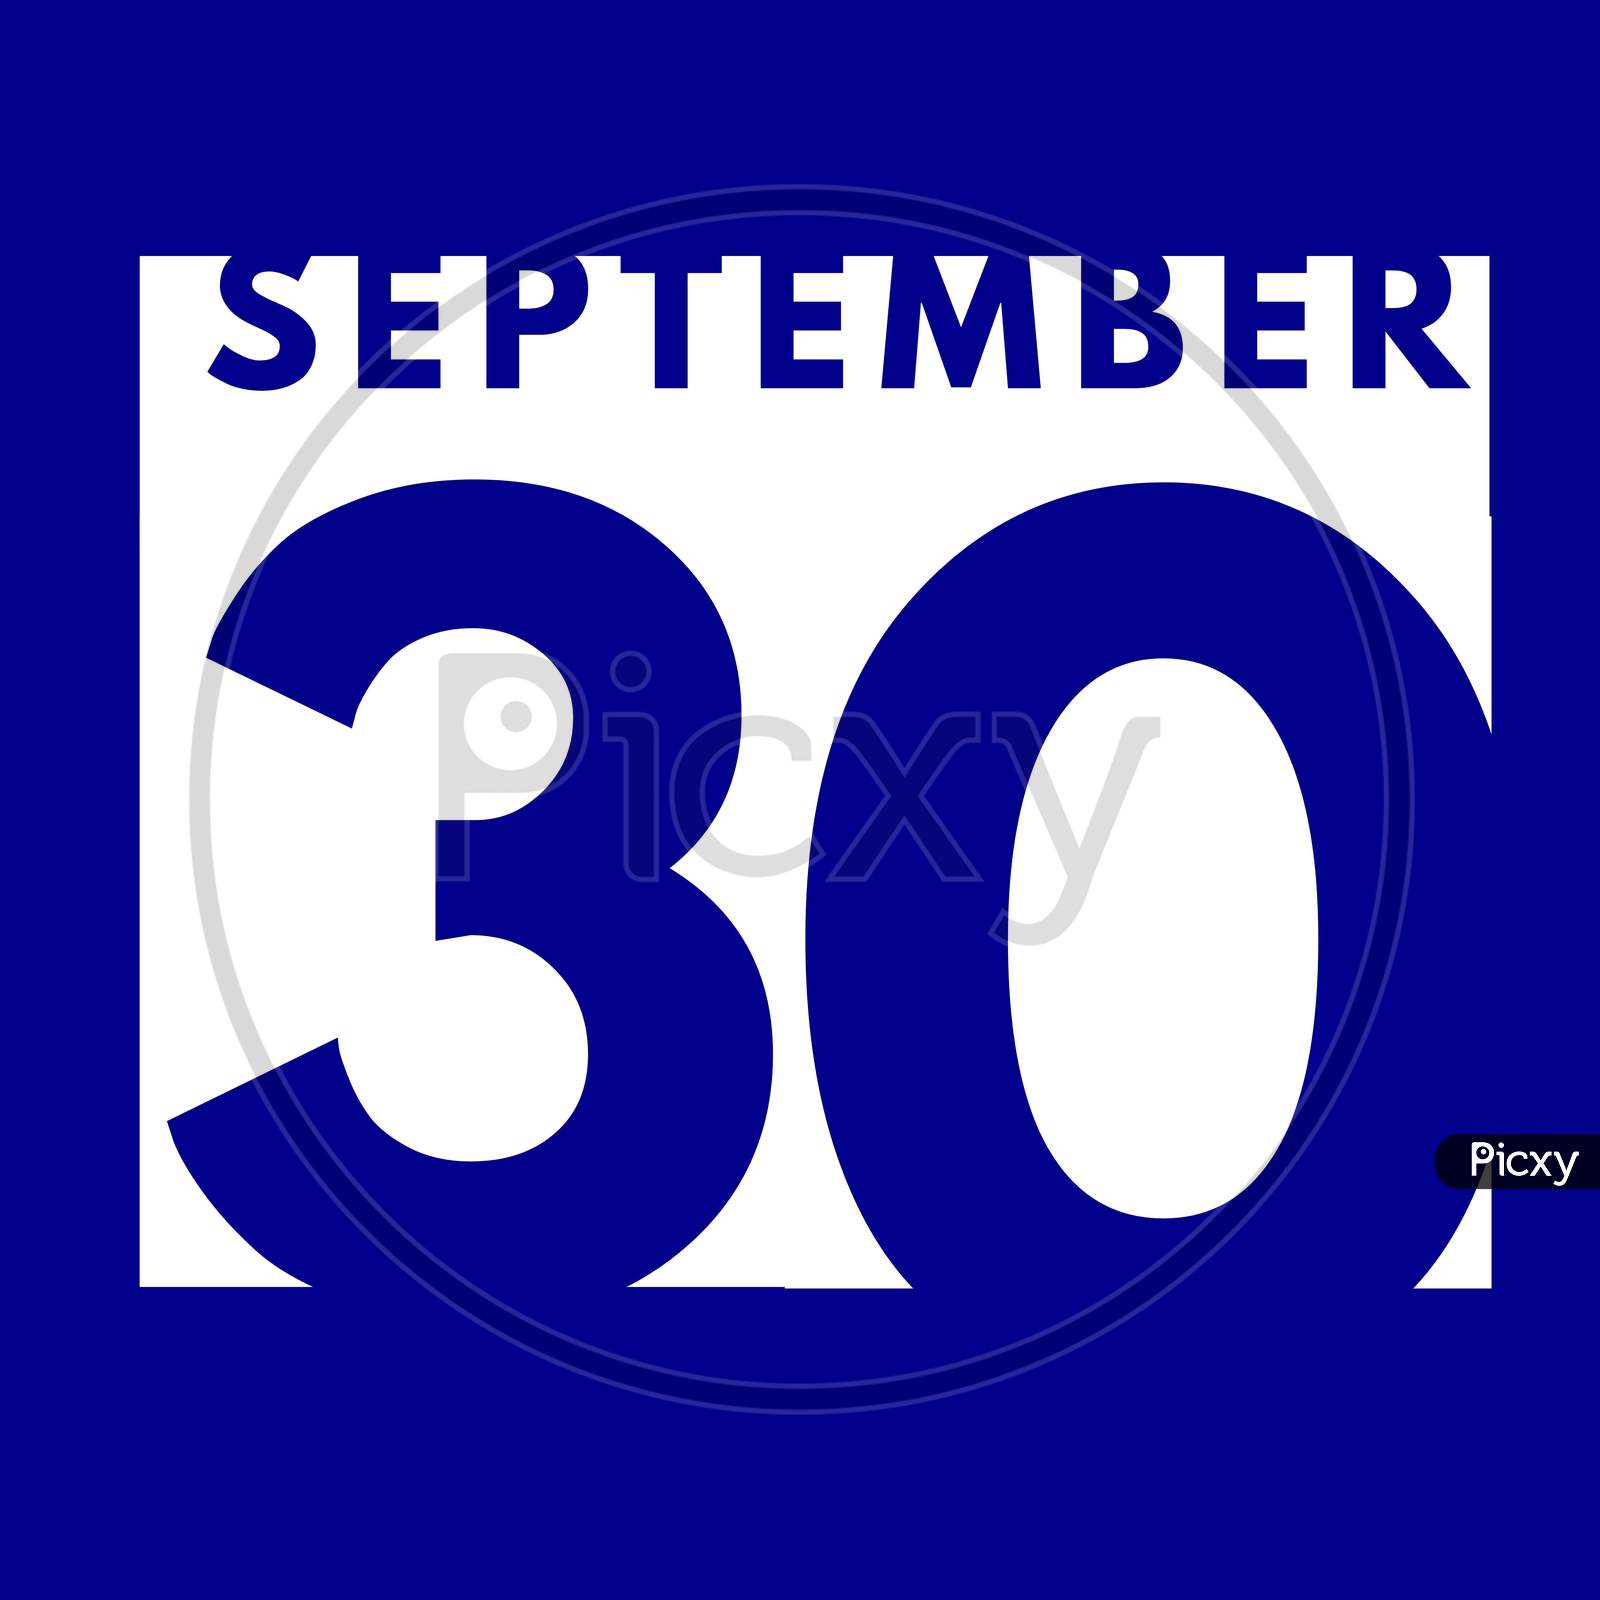 September 30 . Flat Modern Daily Calendar Icon .Date ,Day, Month .Calendar For The Month Of September